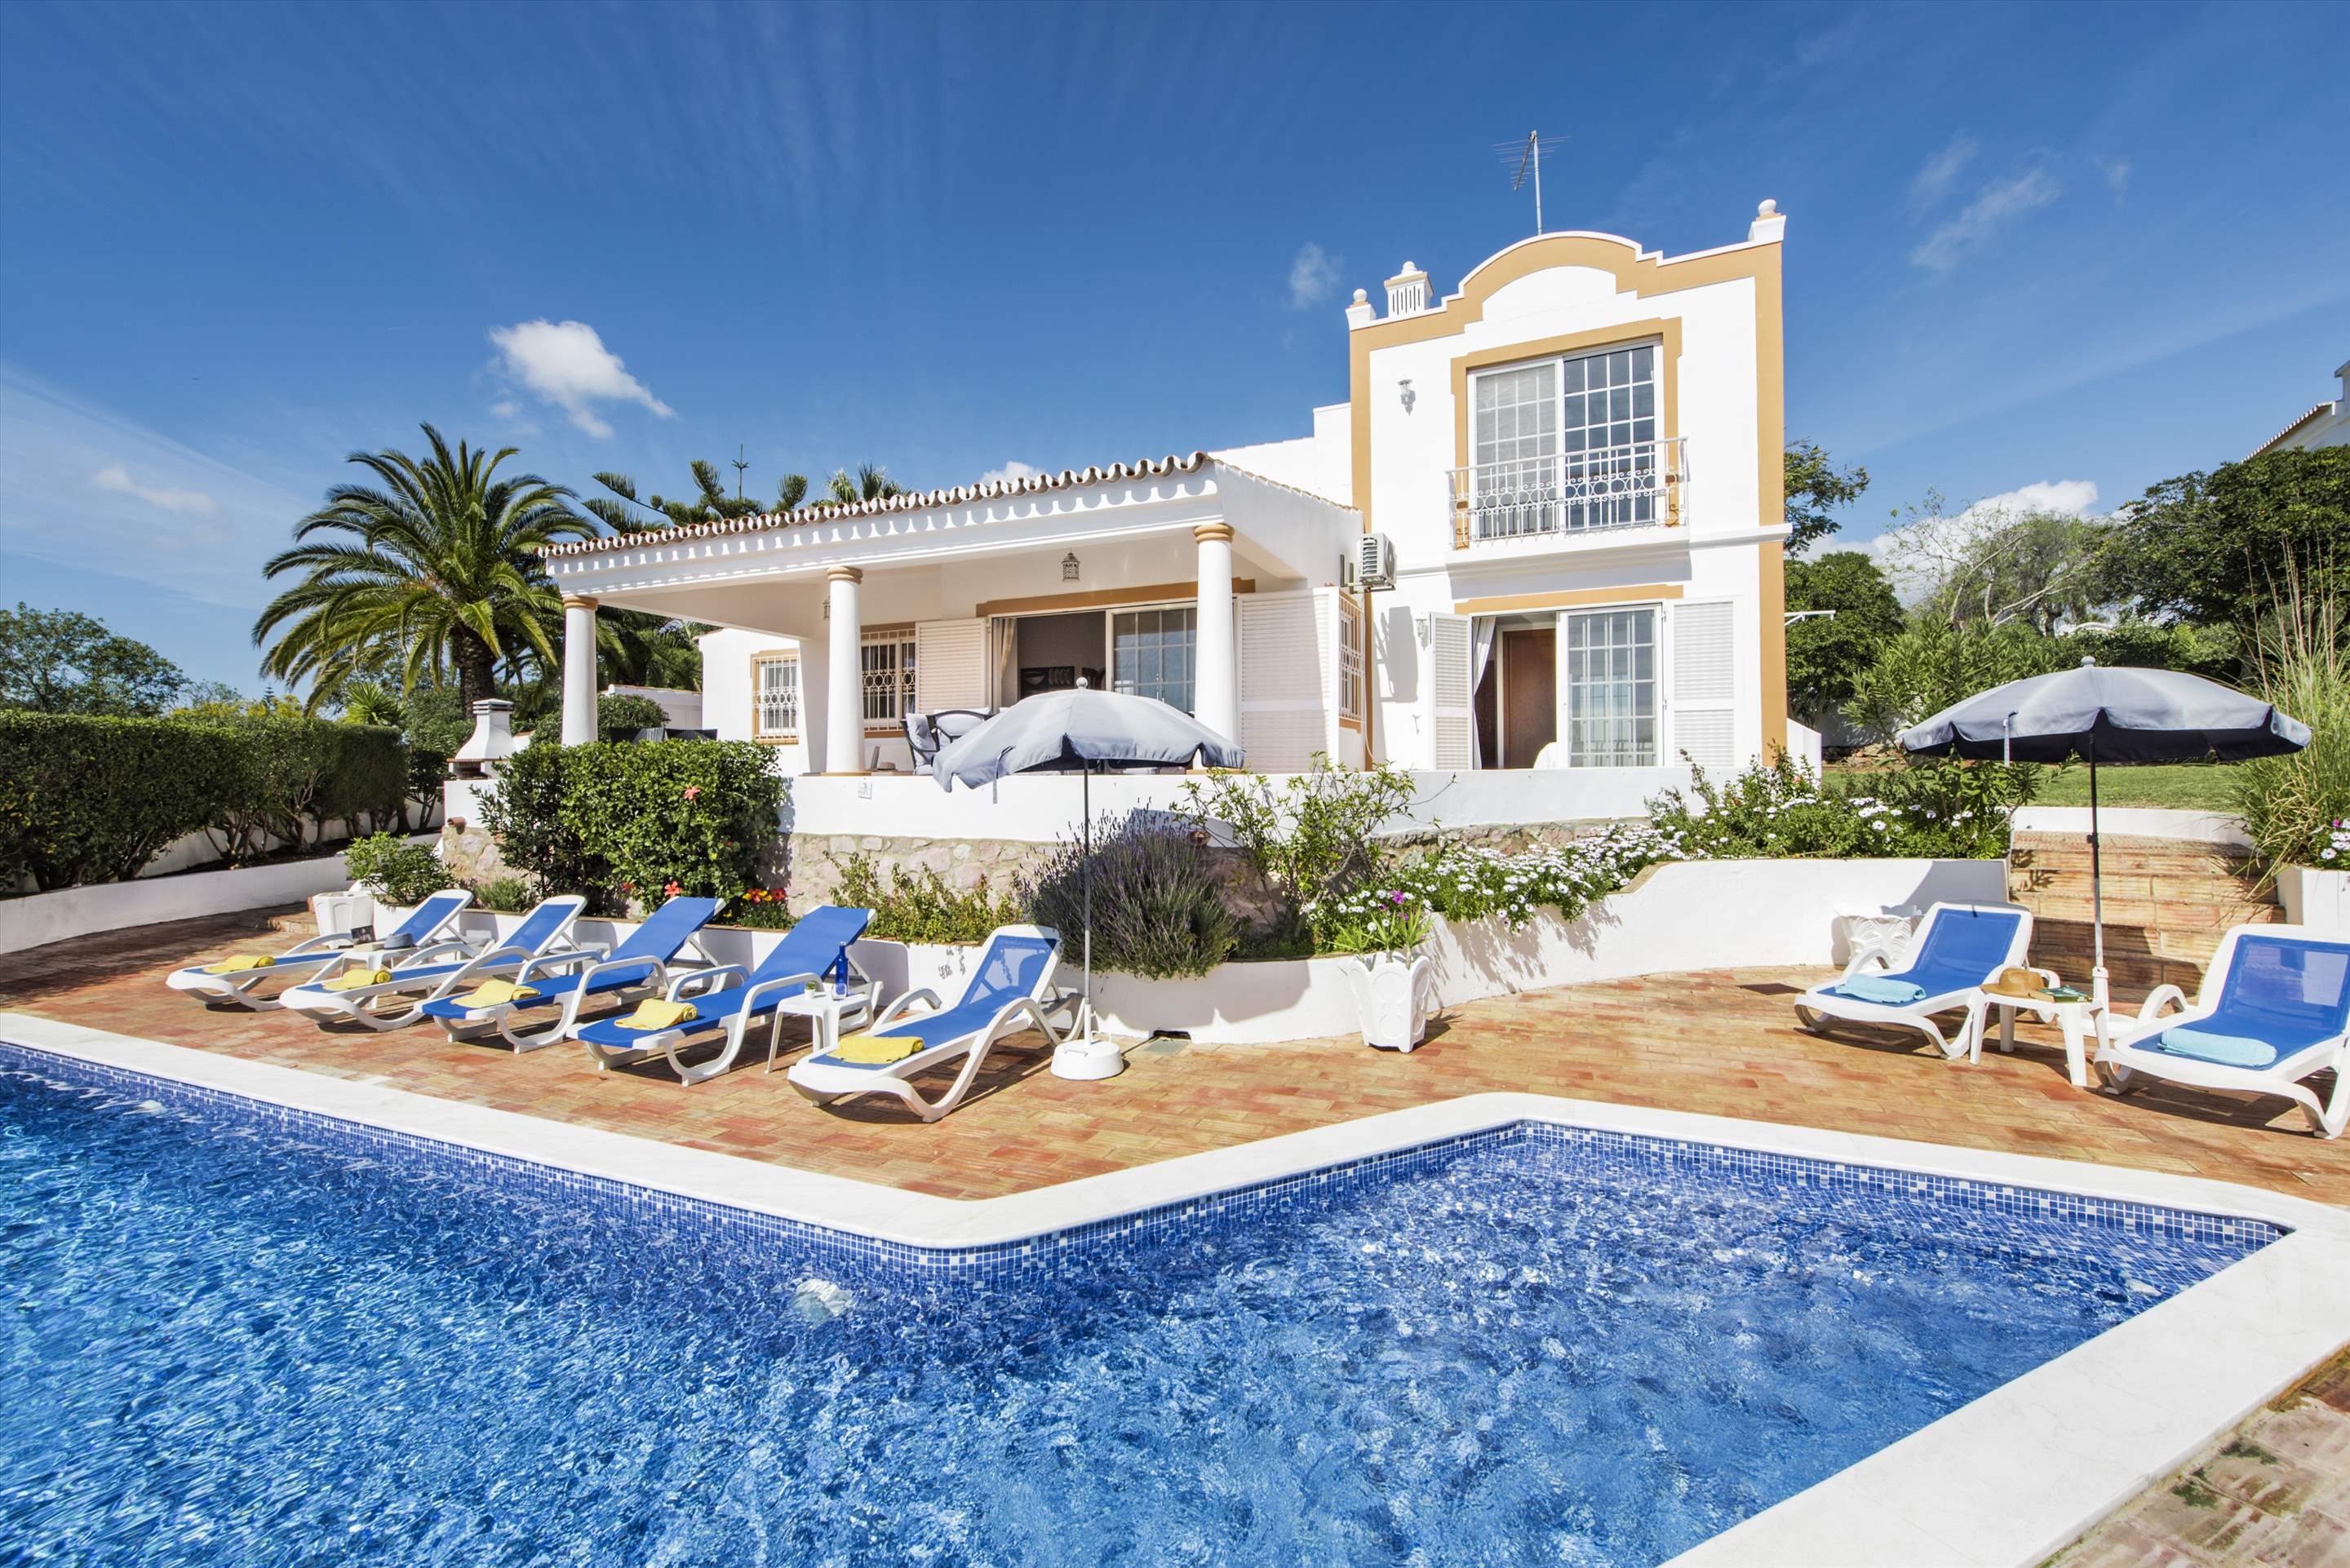 Villa Buganvilia, 3 bedroom villa in Gale, Vale da Parra and Guia, Algarve